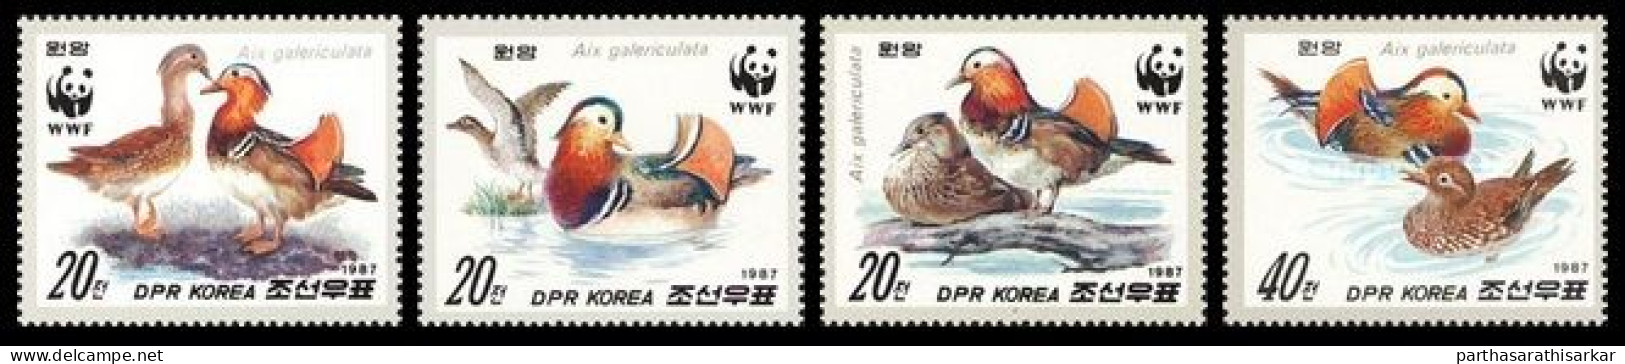 NORTH KOREA 1987 WWF WORLD NATURE CONSERVATION MANDARIN DUCKS COMPLETE SET MNH - Neufs